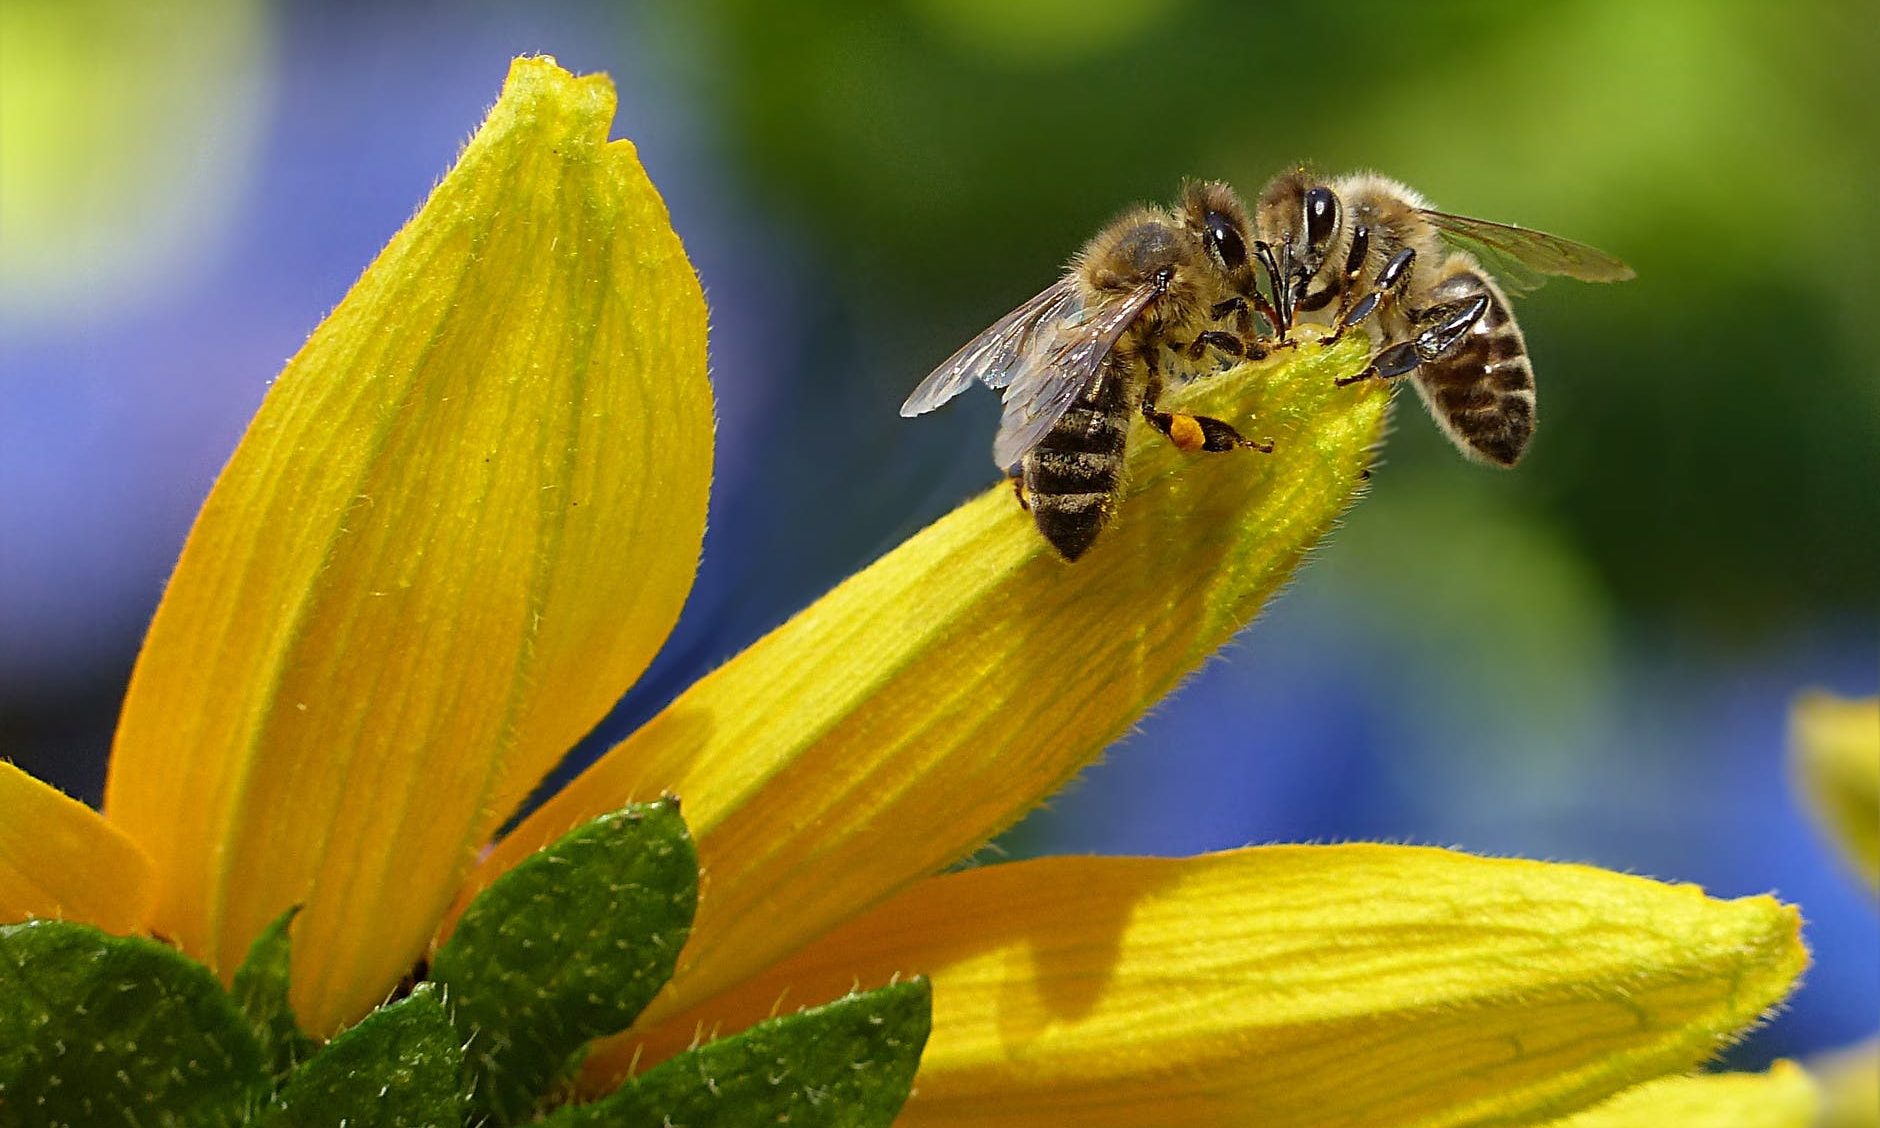 bees, flower, nature, pollinators, pesticides